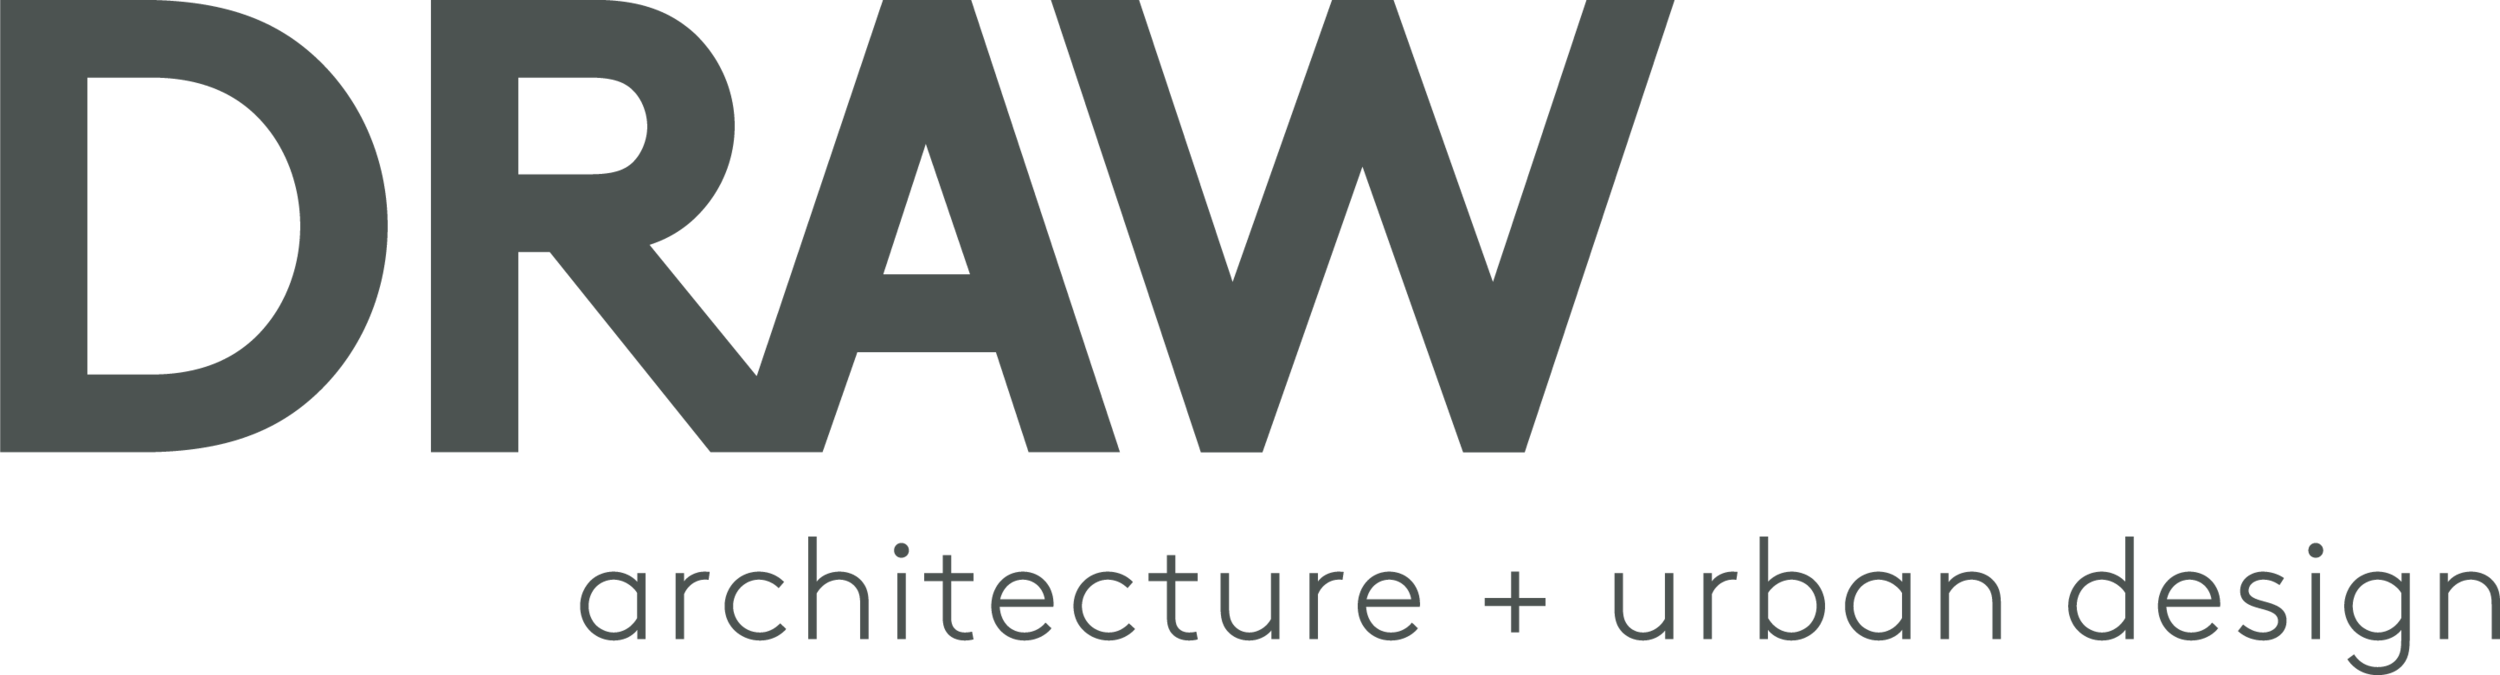 DRAW-Logo-arch-urban-design-gray_LIGHTER.png